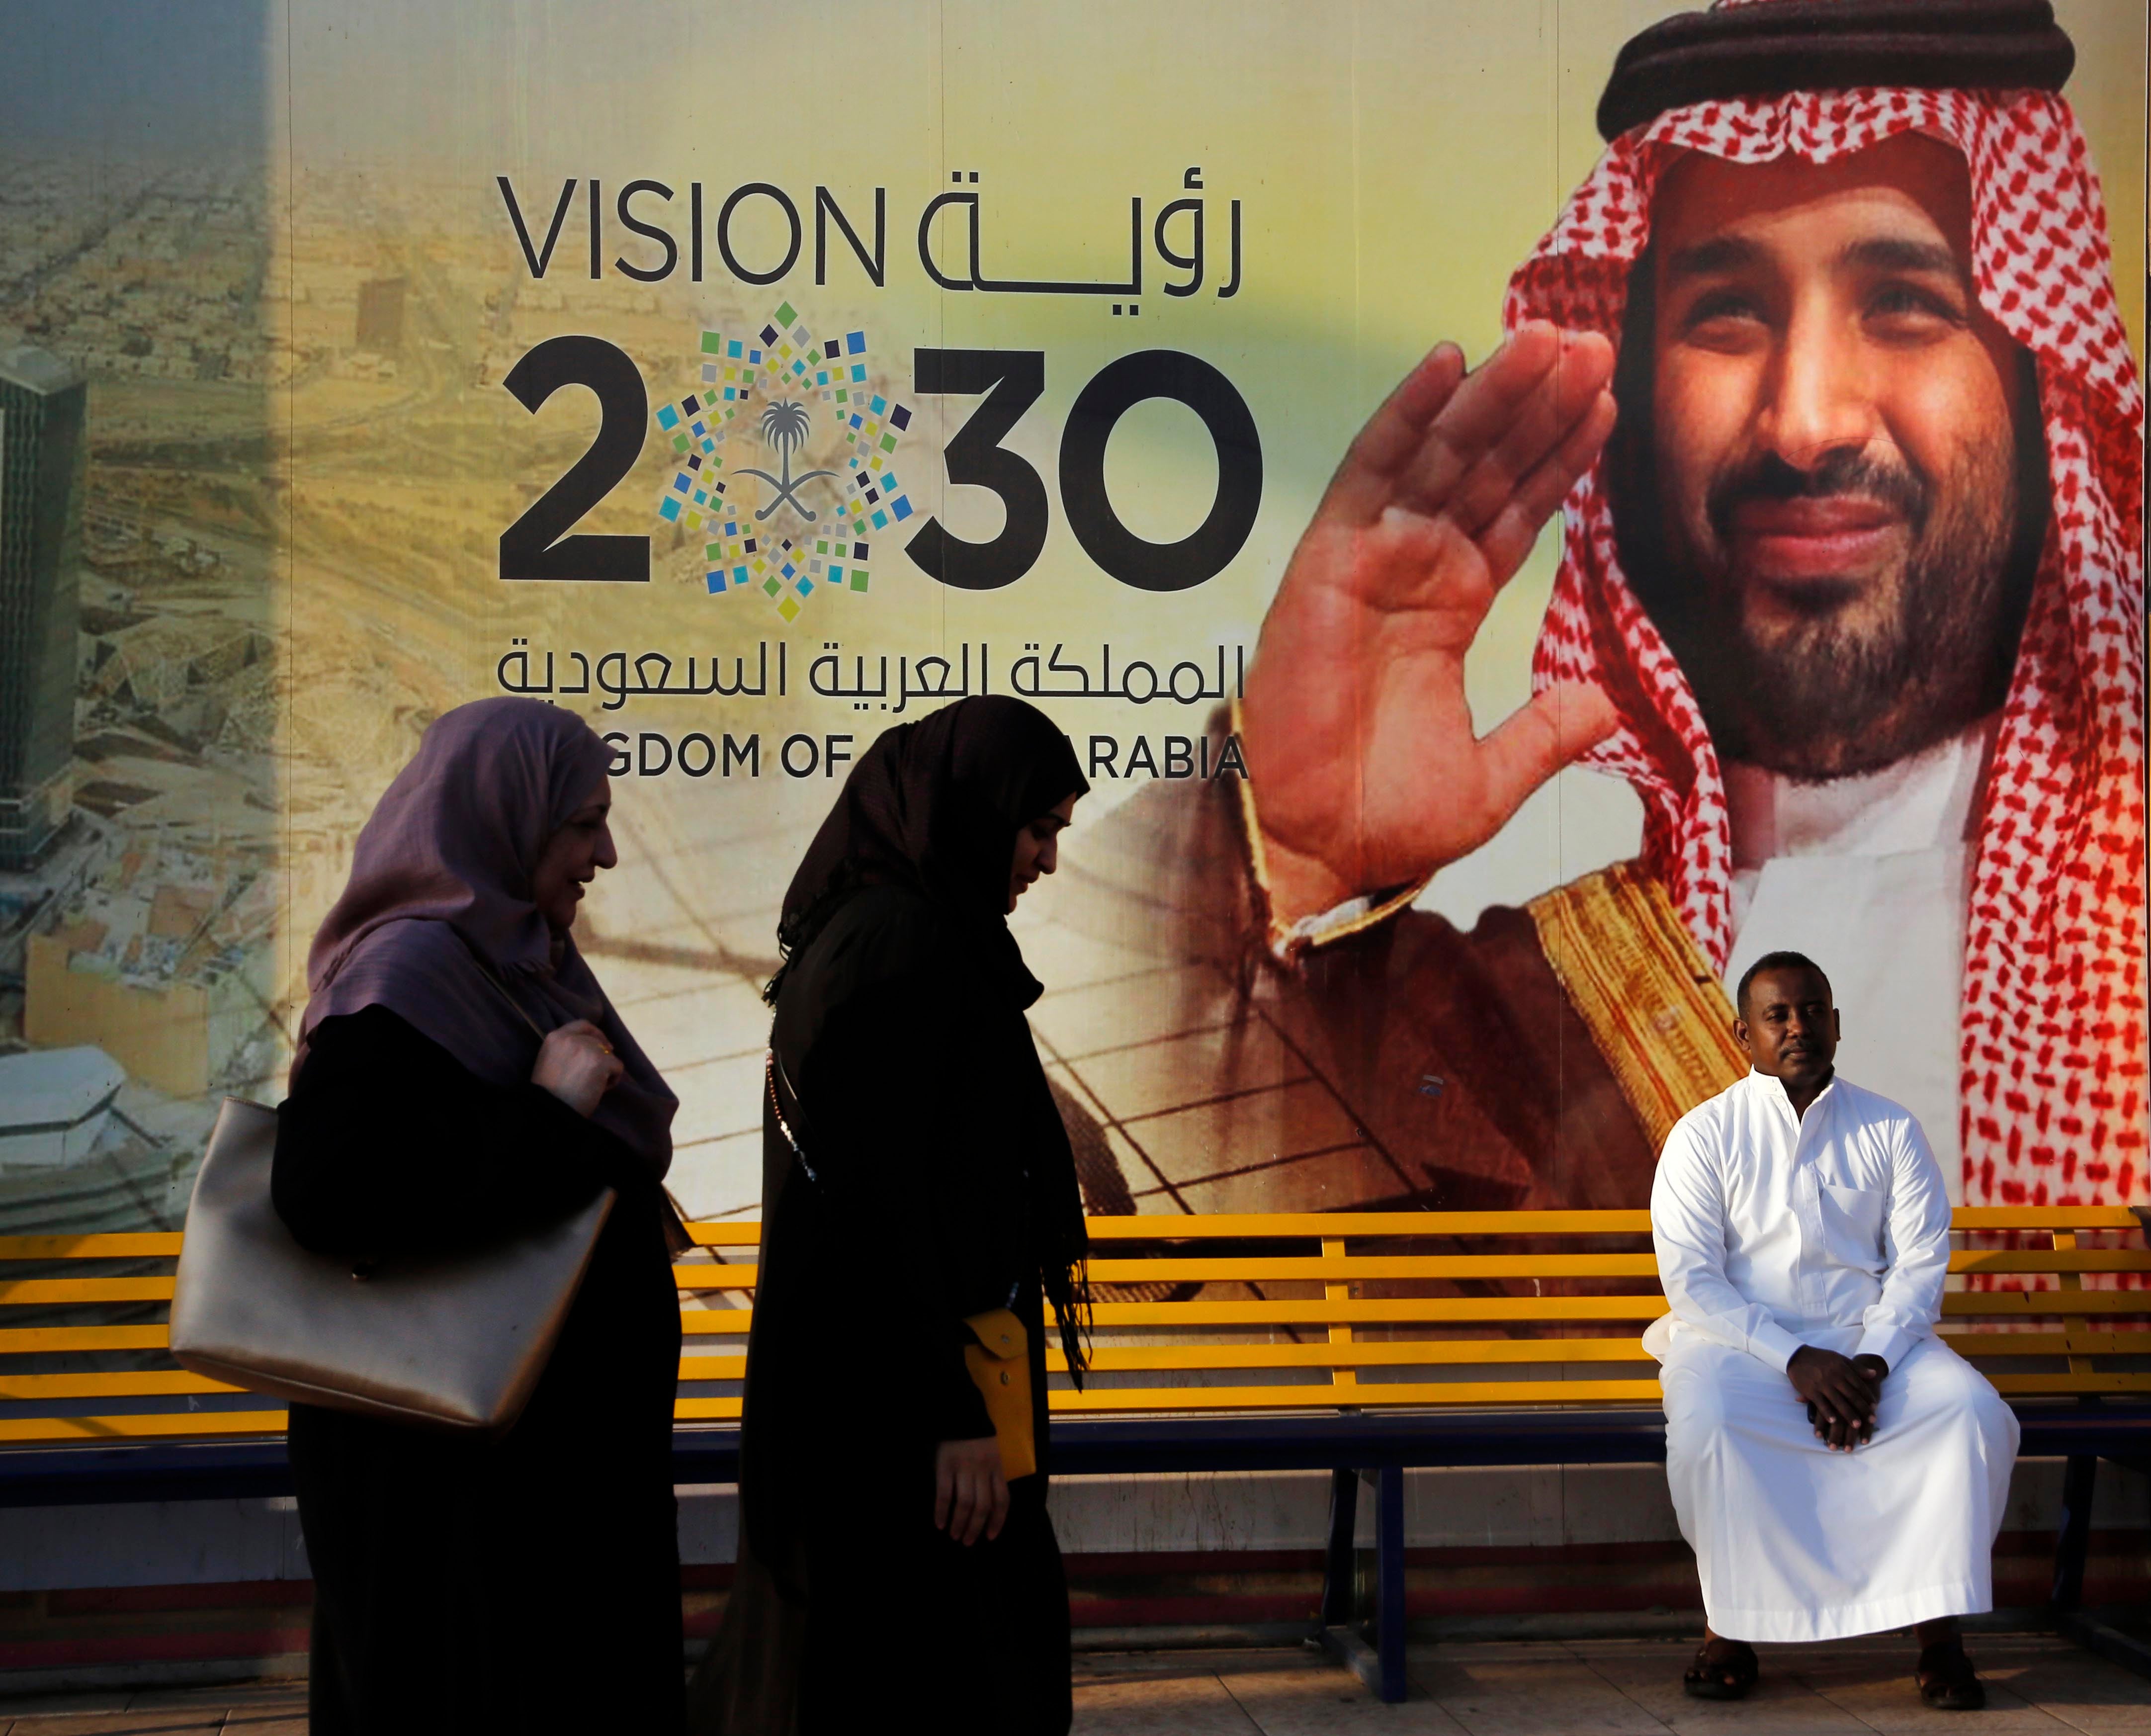 People walk past a Vision 2030 banner showing Saudi Crown Prince Mohammed bin Salman.